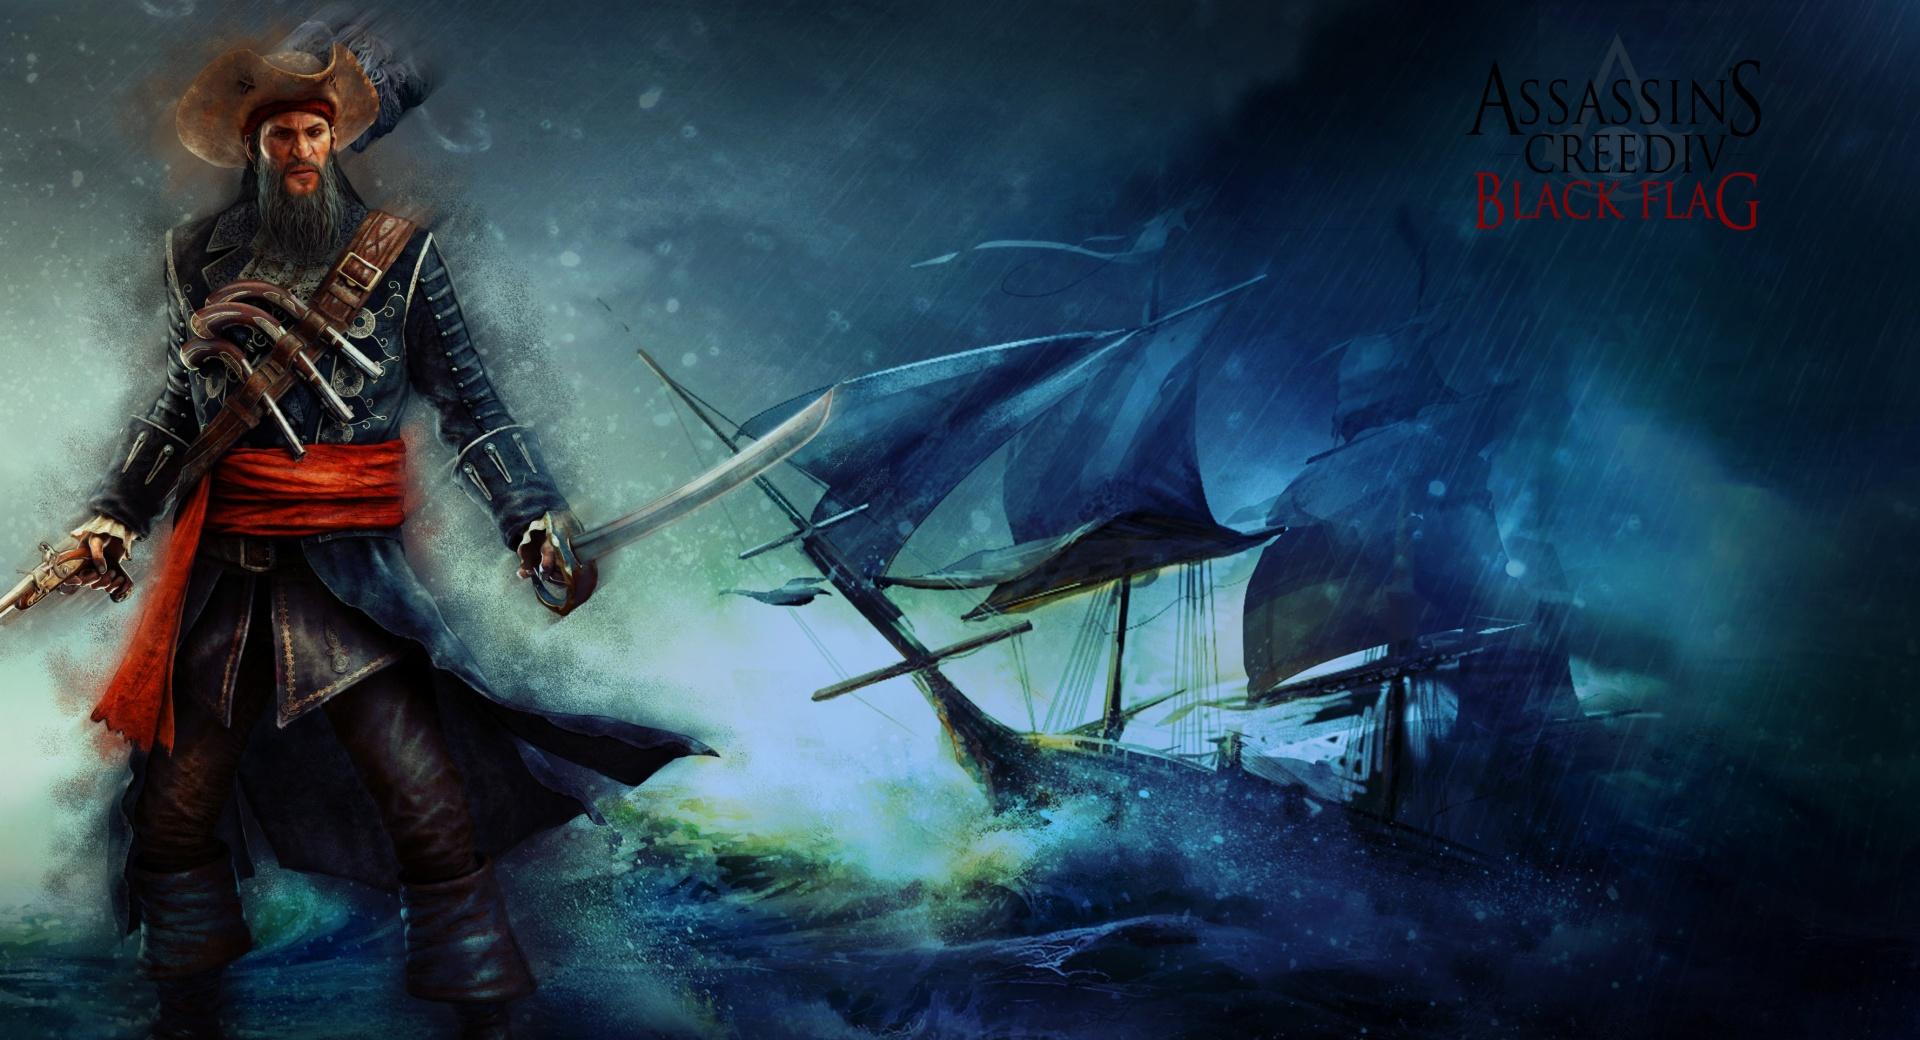 Assassins Creed IV Black Flag Blackbeard at 1280 x 960 size wallpapers HD quality